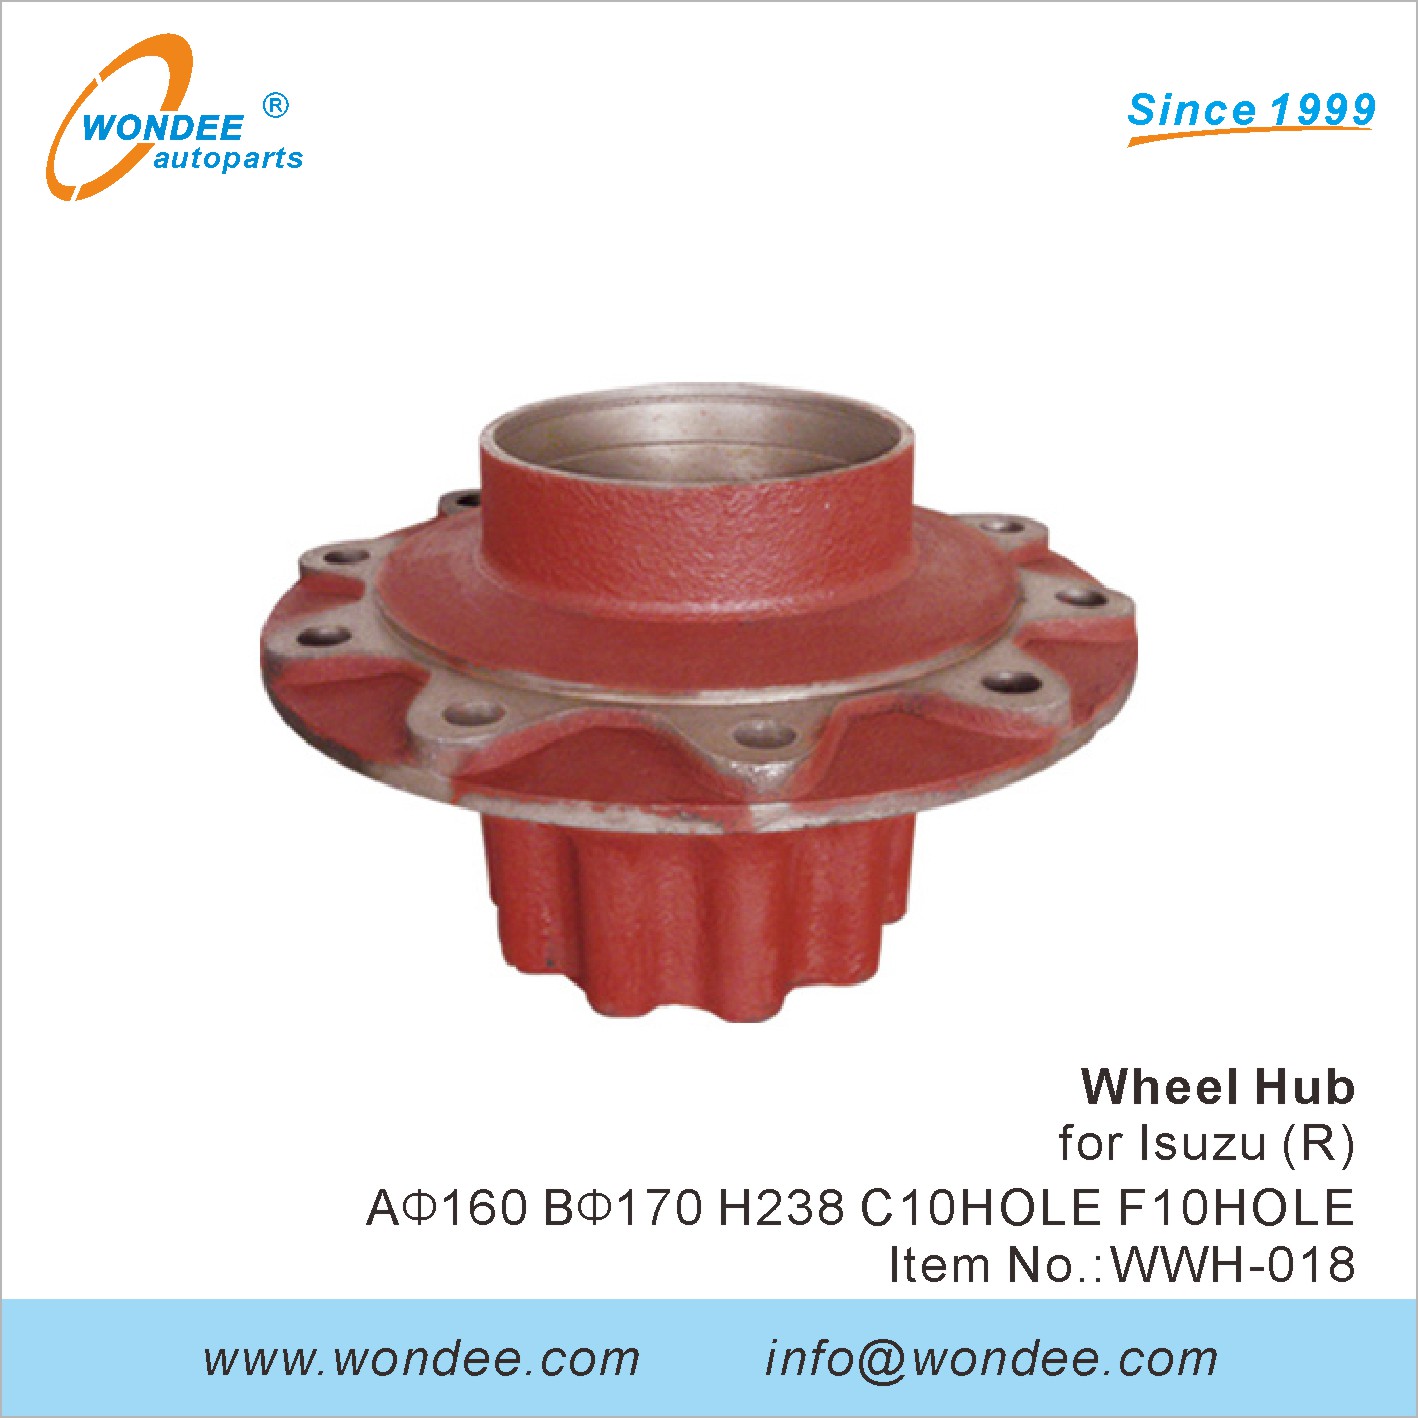 WONDEE wheel hub (18)